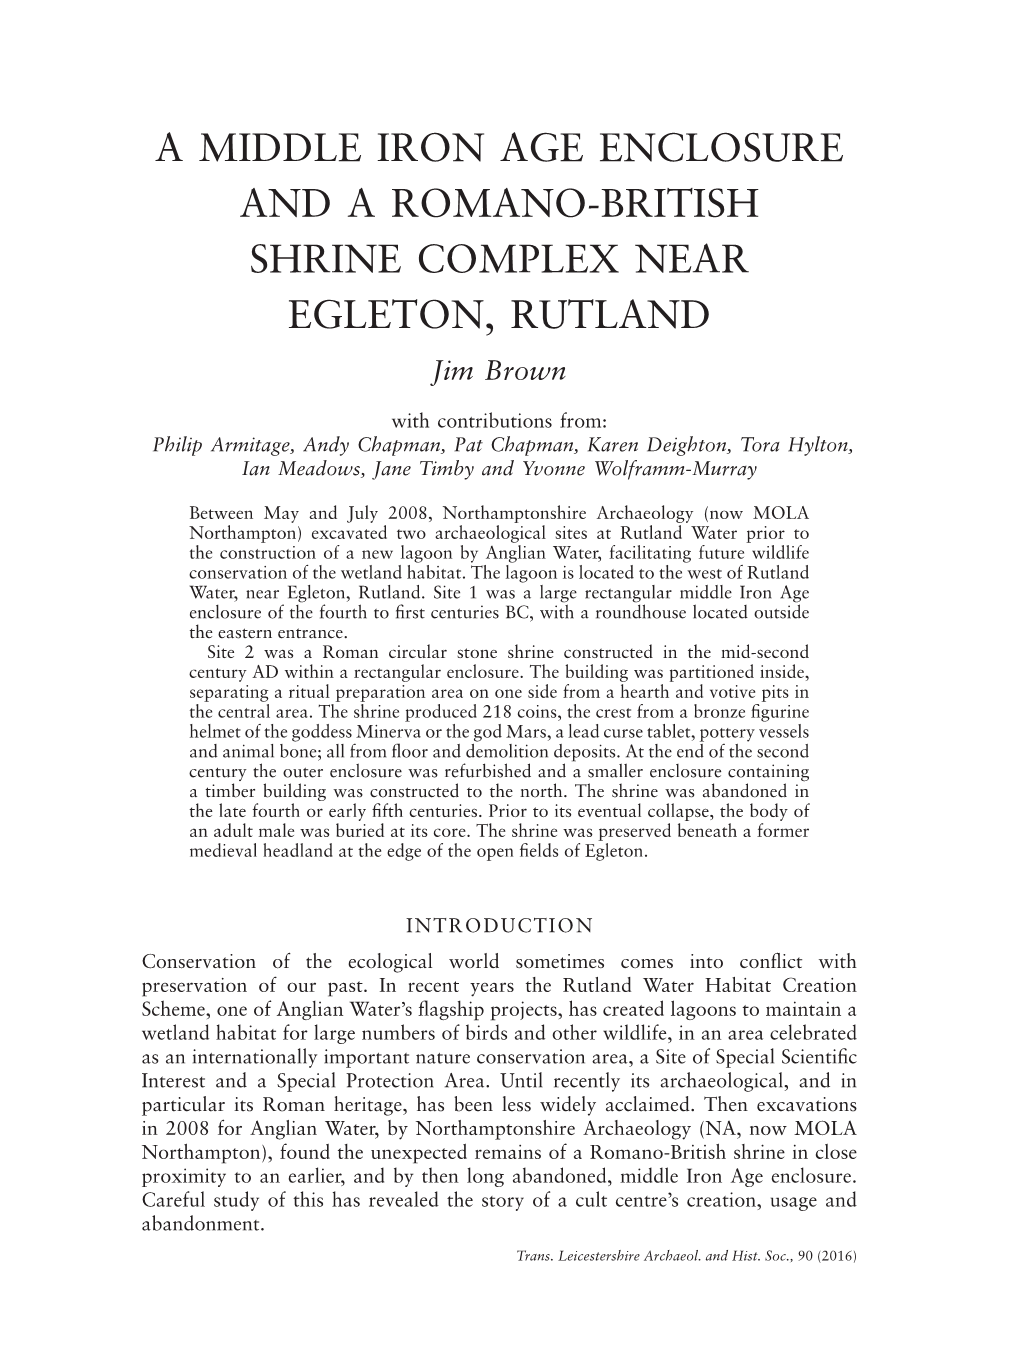 A MIDDLE IRON AGE ENCLOSURE and a ROMANO-BRITISH SHRINE COMPLEX NEAR EGLETON, RUTLAND Jim Brown